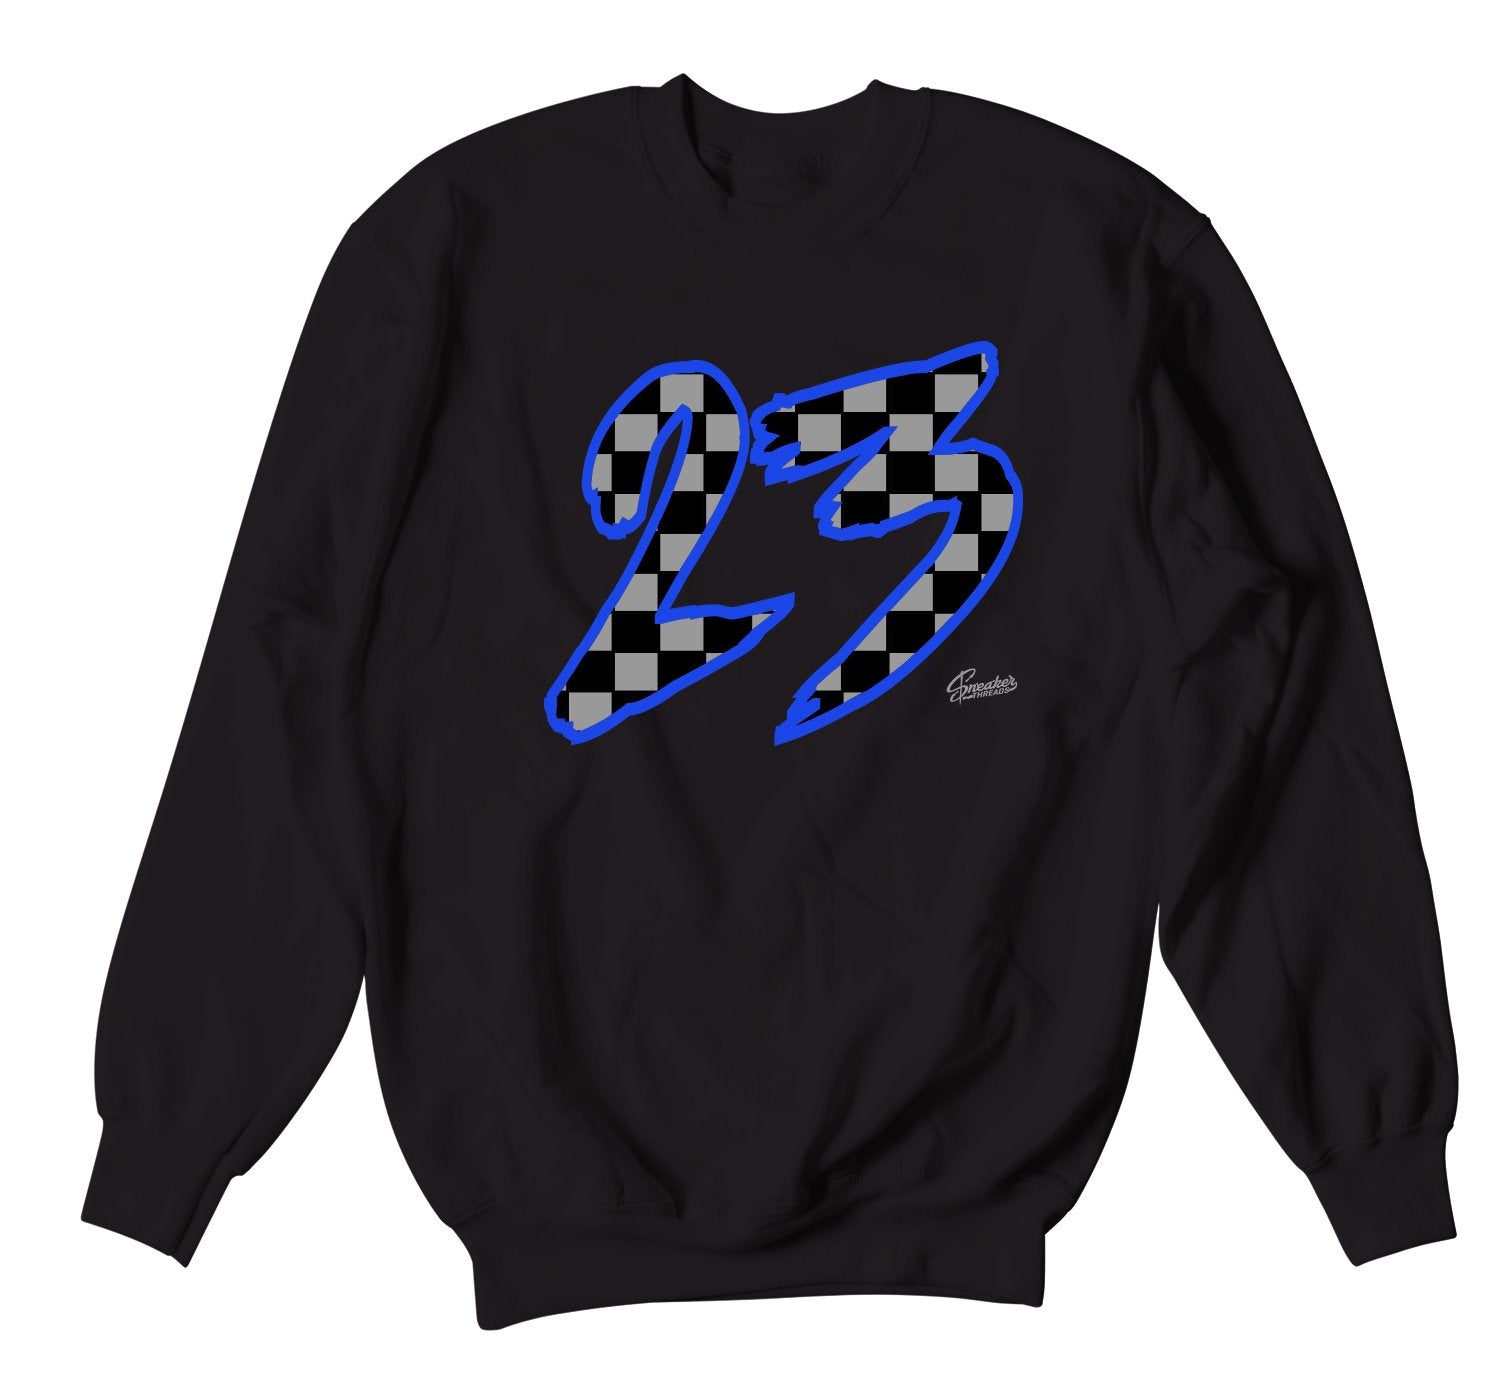 sweater matching Jordan 9 racer blues